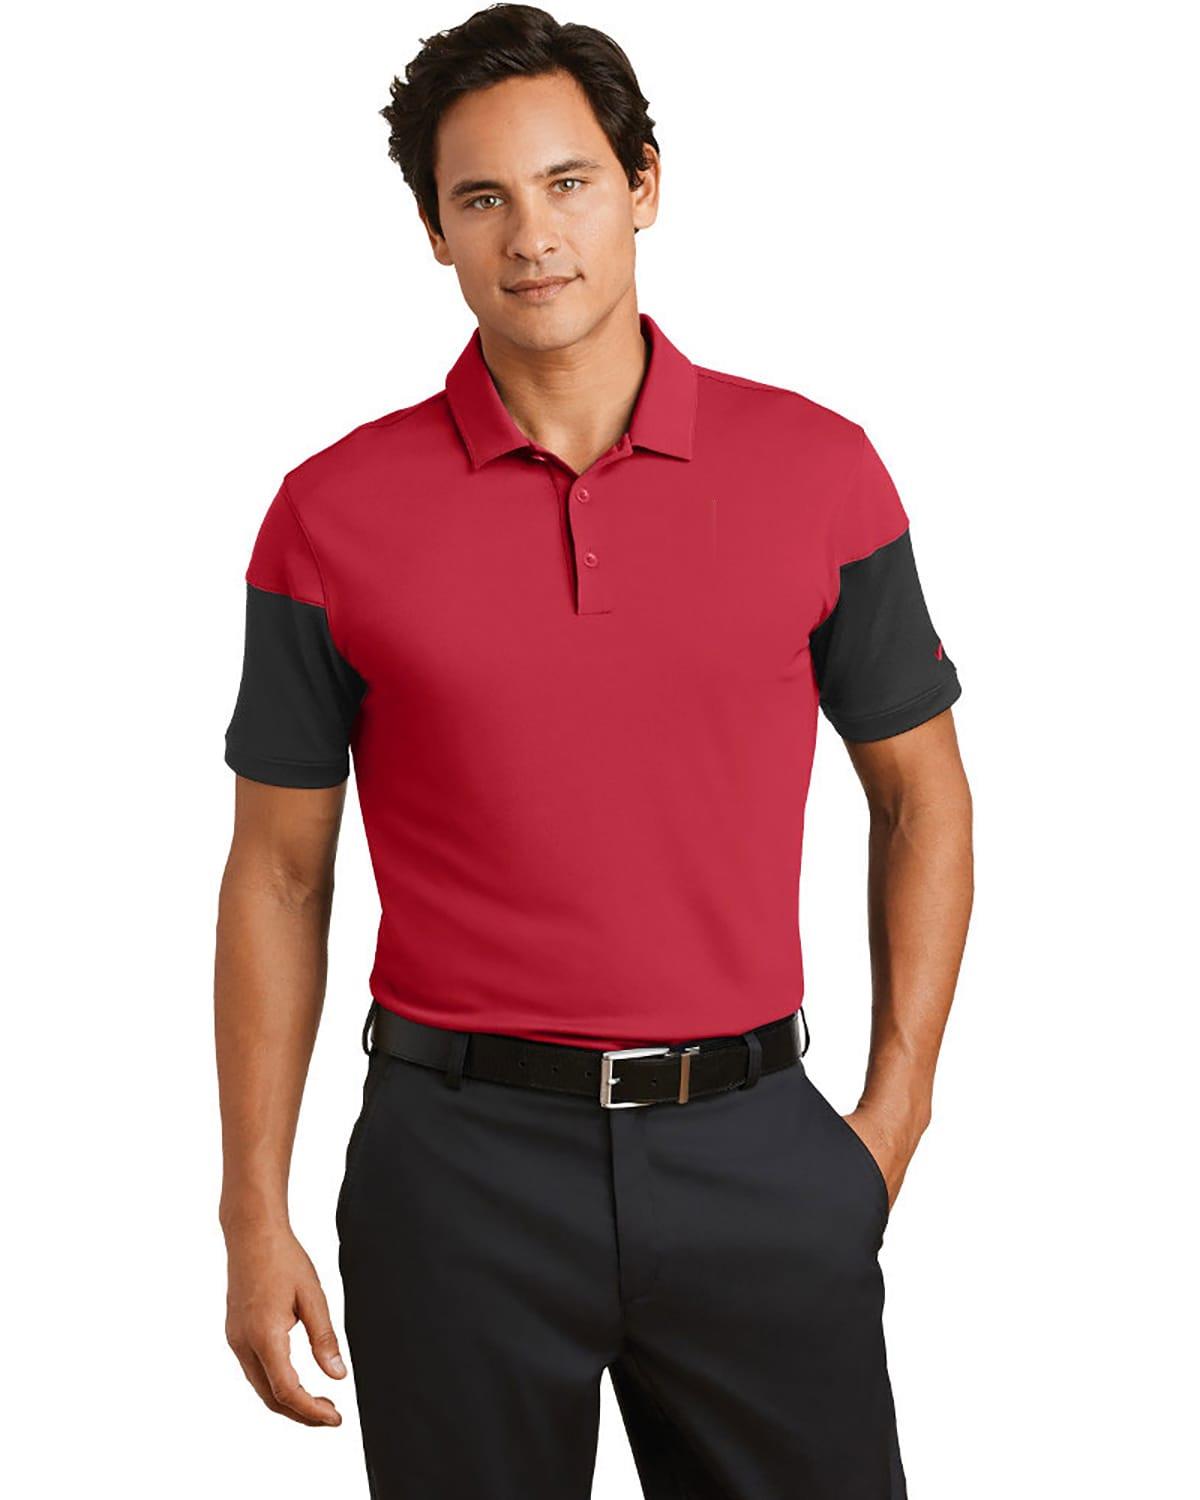 Nike Golf 779802 Mens Dri-FIT Sleeve Polo Shirt